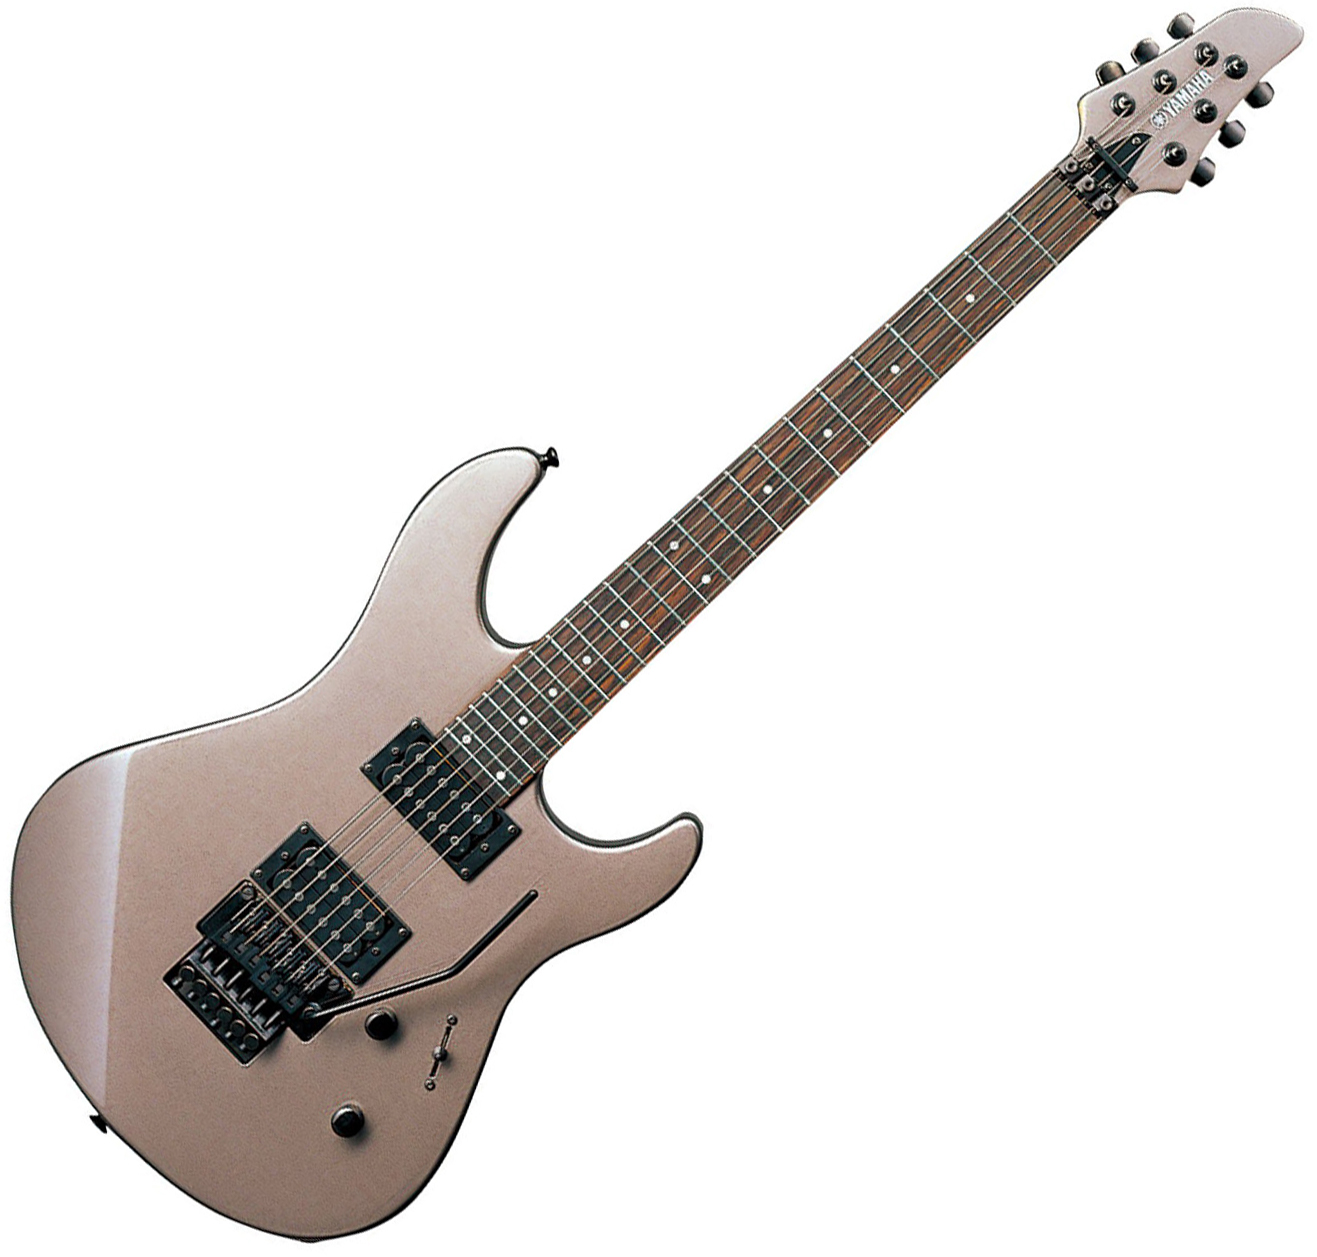 Yamaha RGX220DZ - dark metallic gray Solid body electric guitar grey